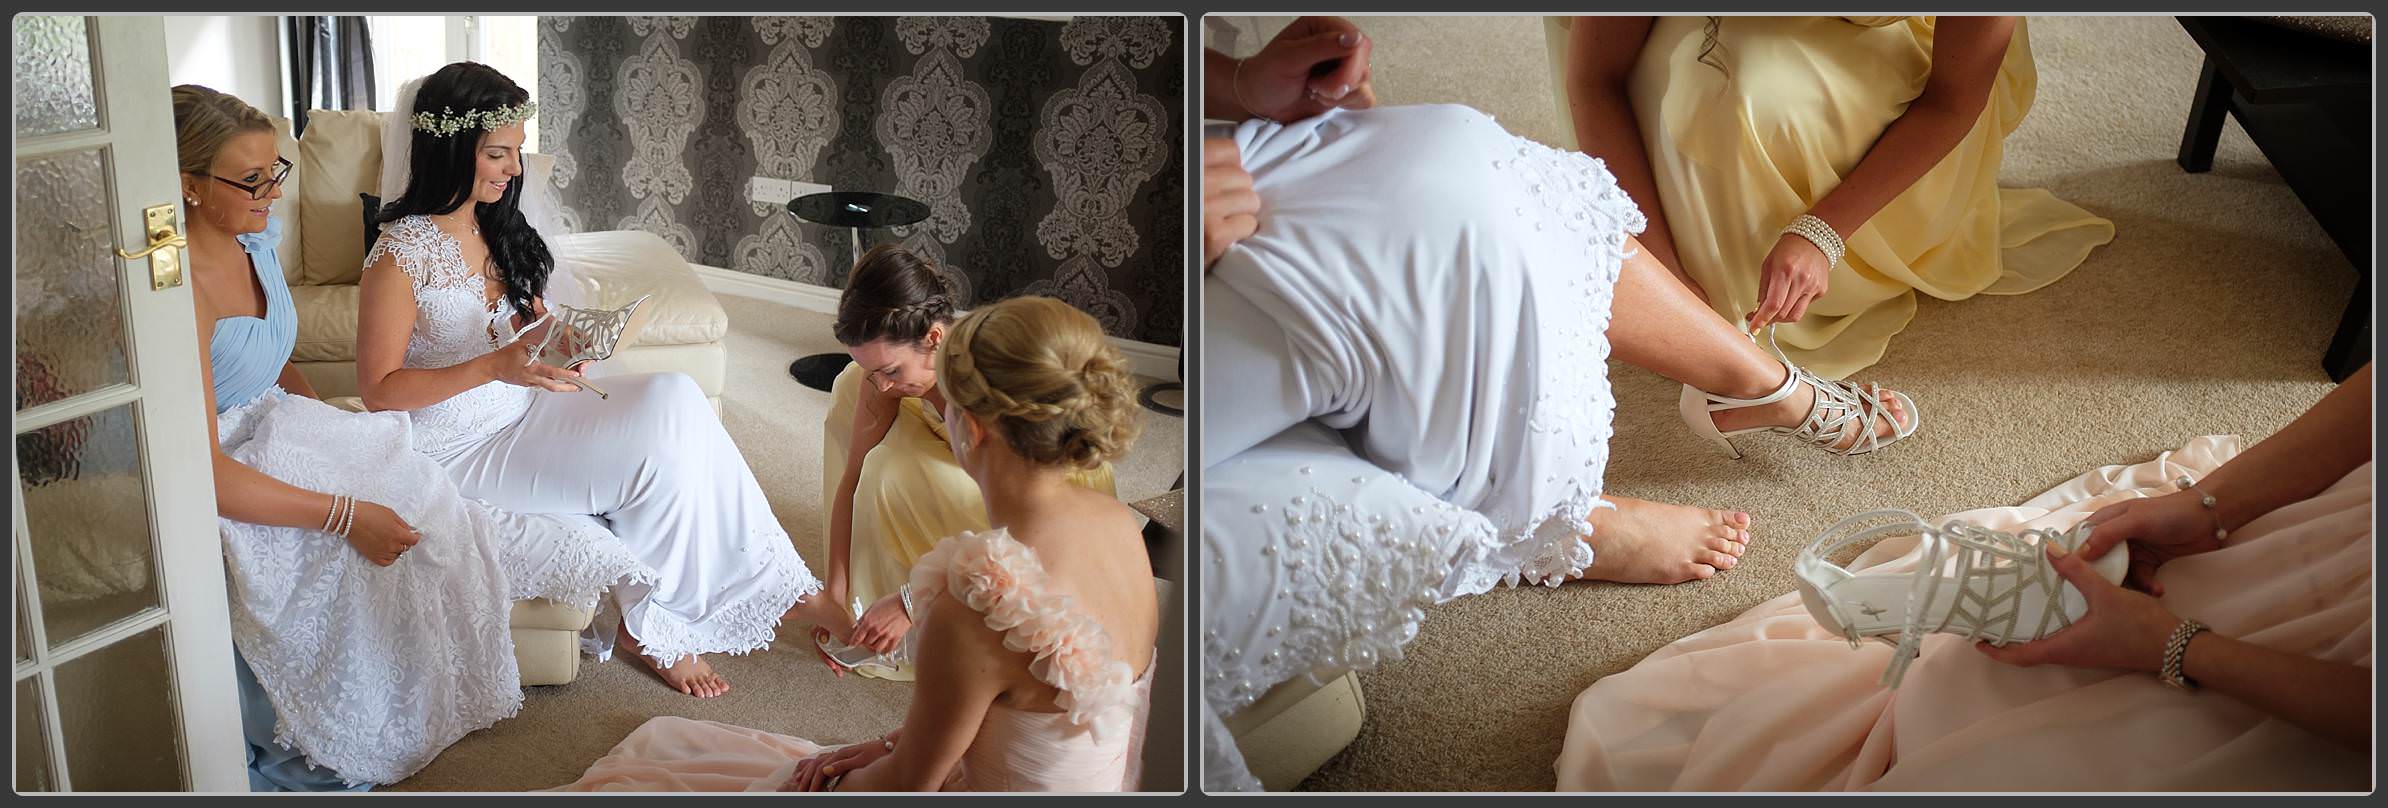 Bridal preparation photos